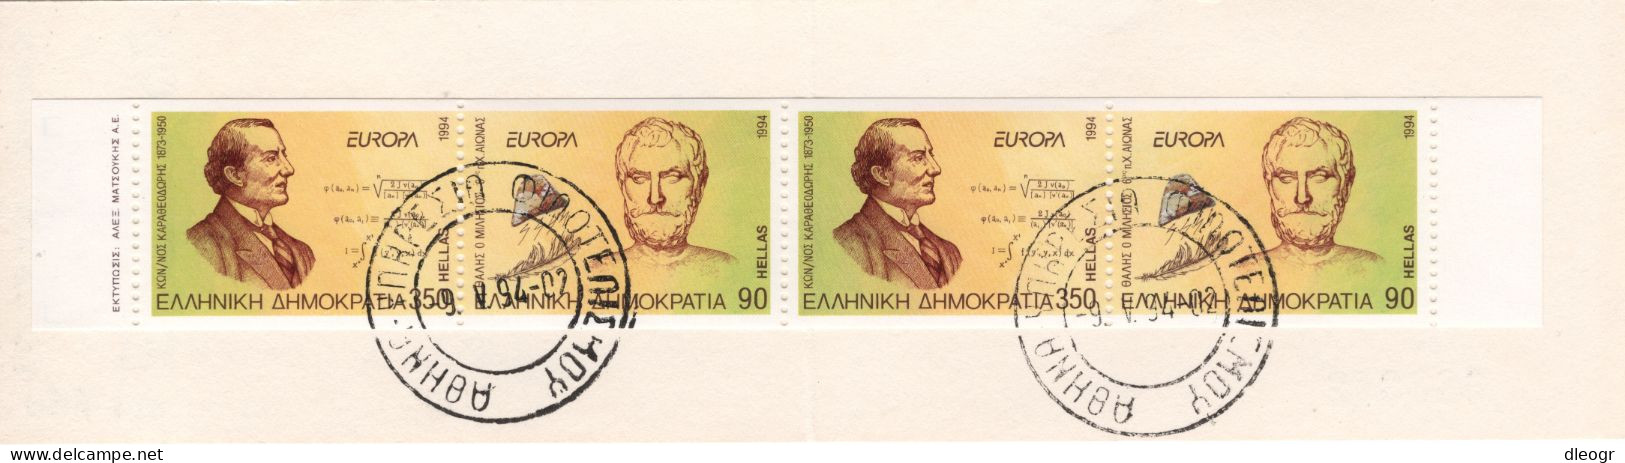 Greece 1994 Europa Cept Imperforate Booklet Used - Markenheftchen